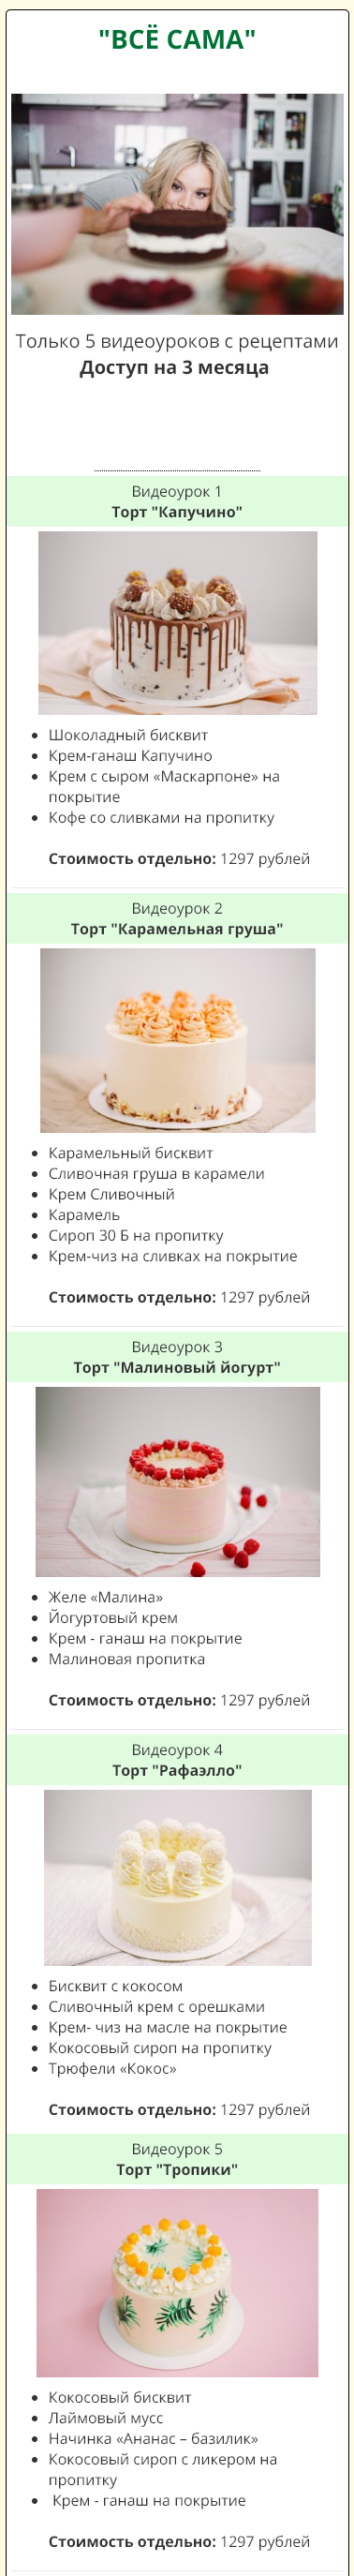 screenshot-cloudberrycakes.ru-2020.01.png